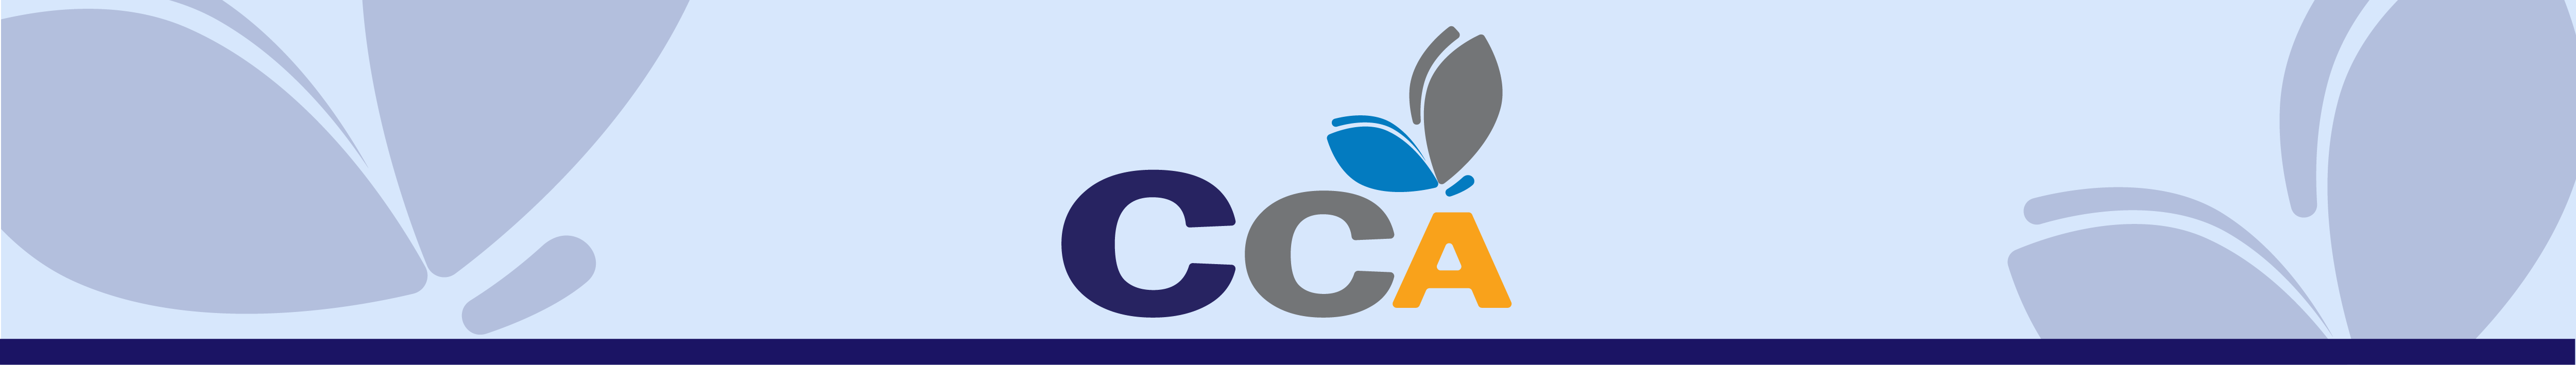 CCA banner